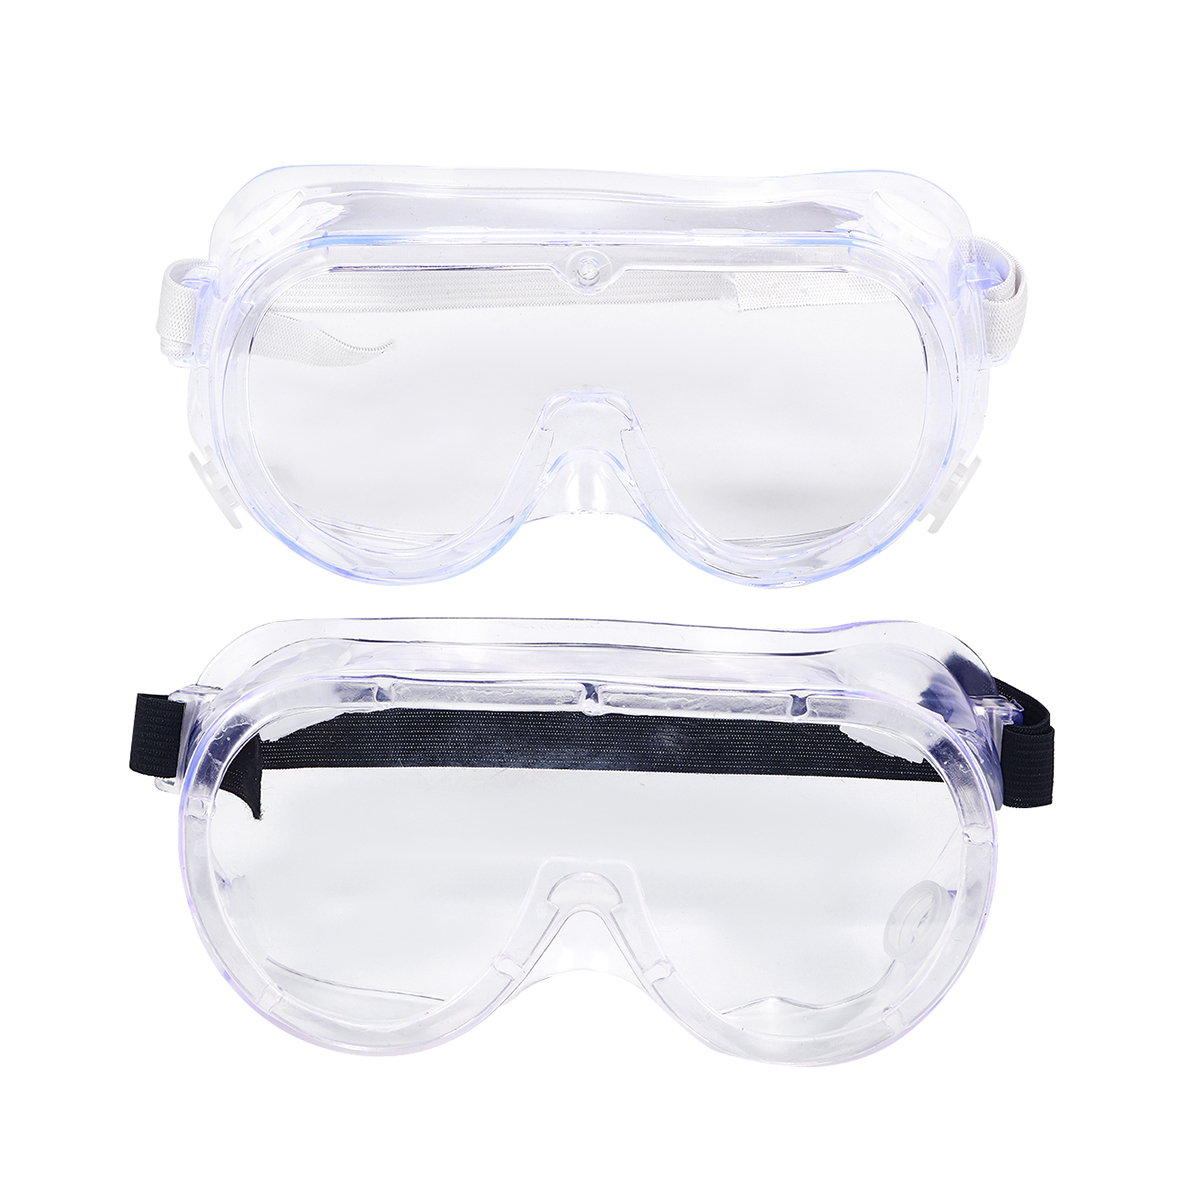 Safety-Goggles-Anti-Fog-Dust-Splash-proof-Glasses-Lens-Lab-Work-Eye-Protection-1778166-10